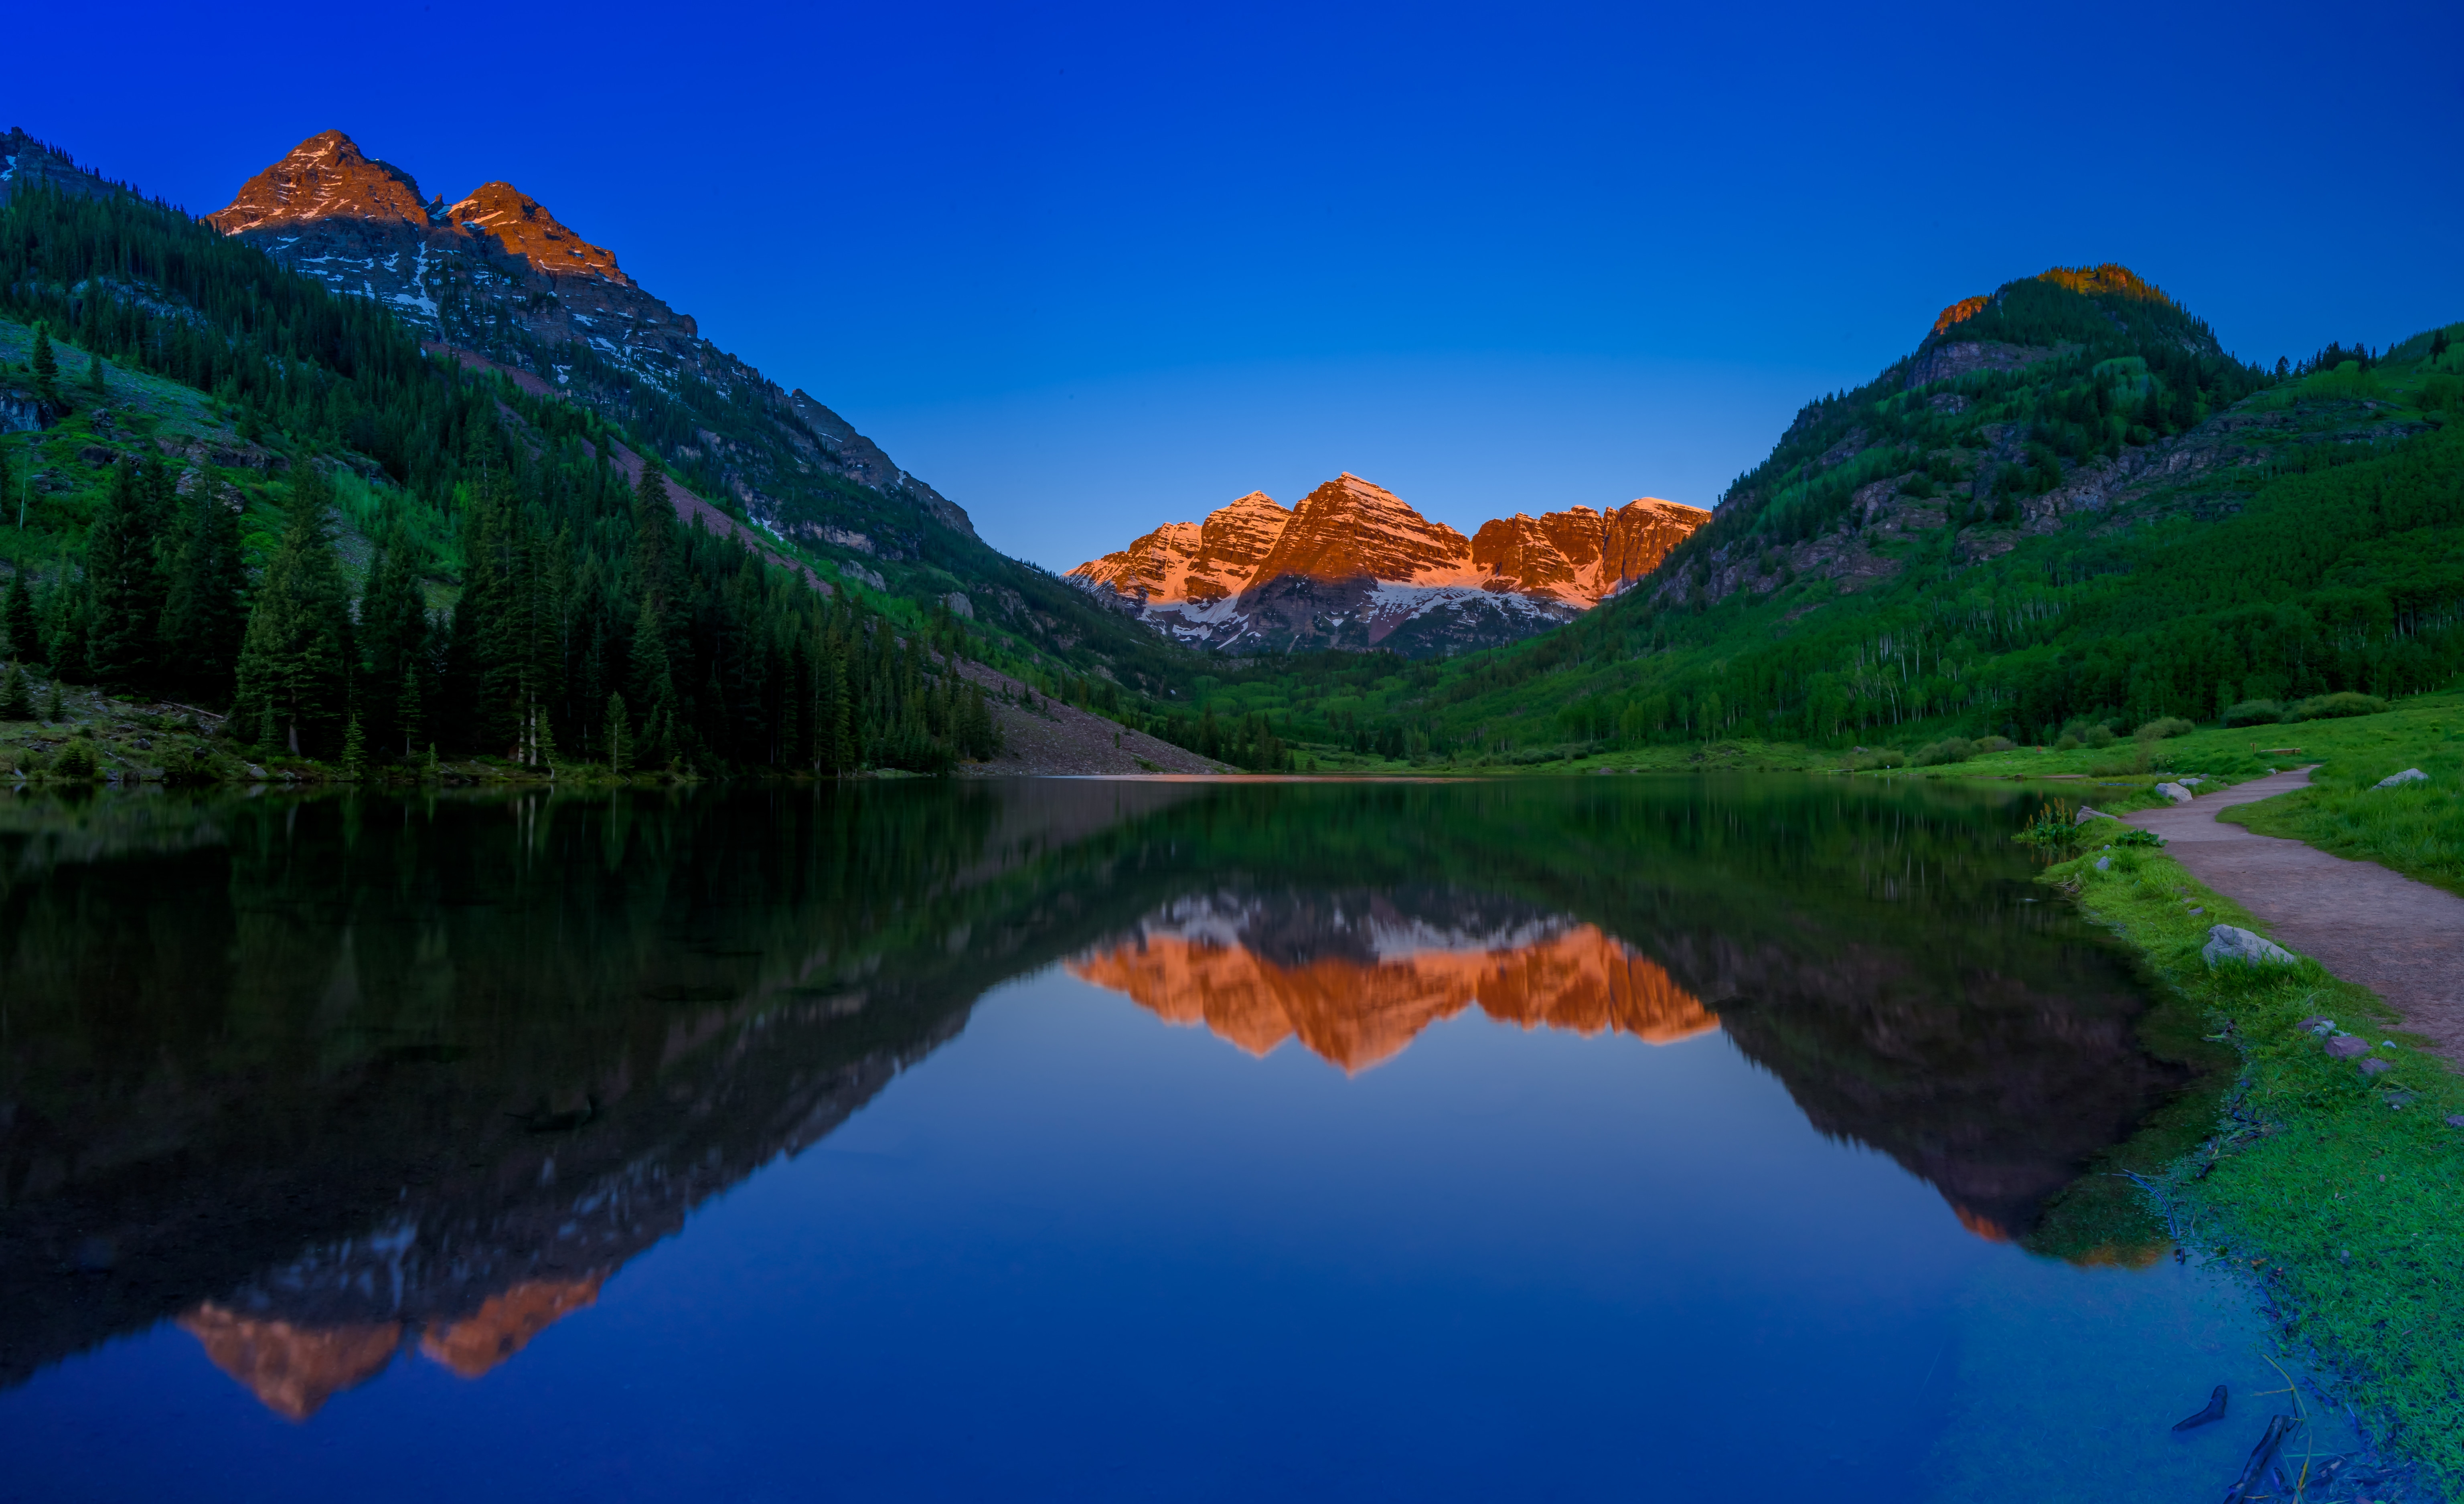 HD wallpaper, Reflection, Maroon Lake, United States, Landscape, Alpine Trees, Clear Sky, Alpenglow, Dawn, 5K, Maroon Bells, Blue Sky, Colorado, Sunrise